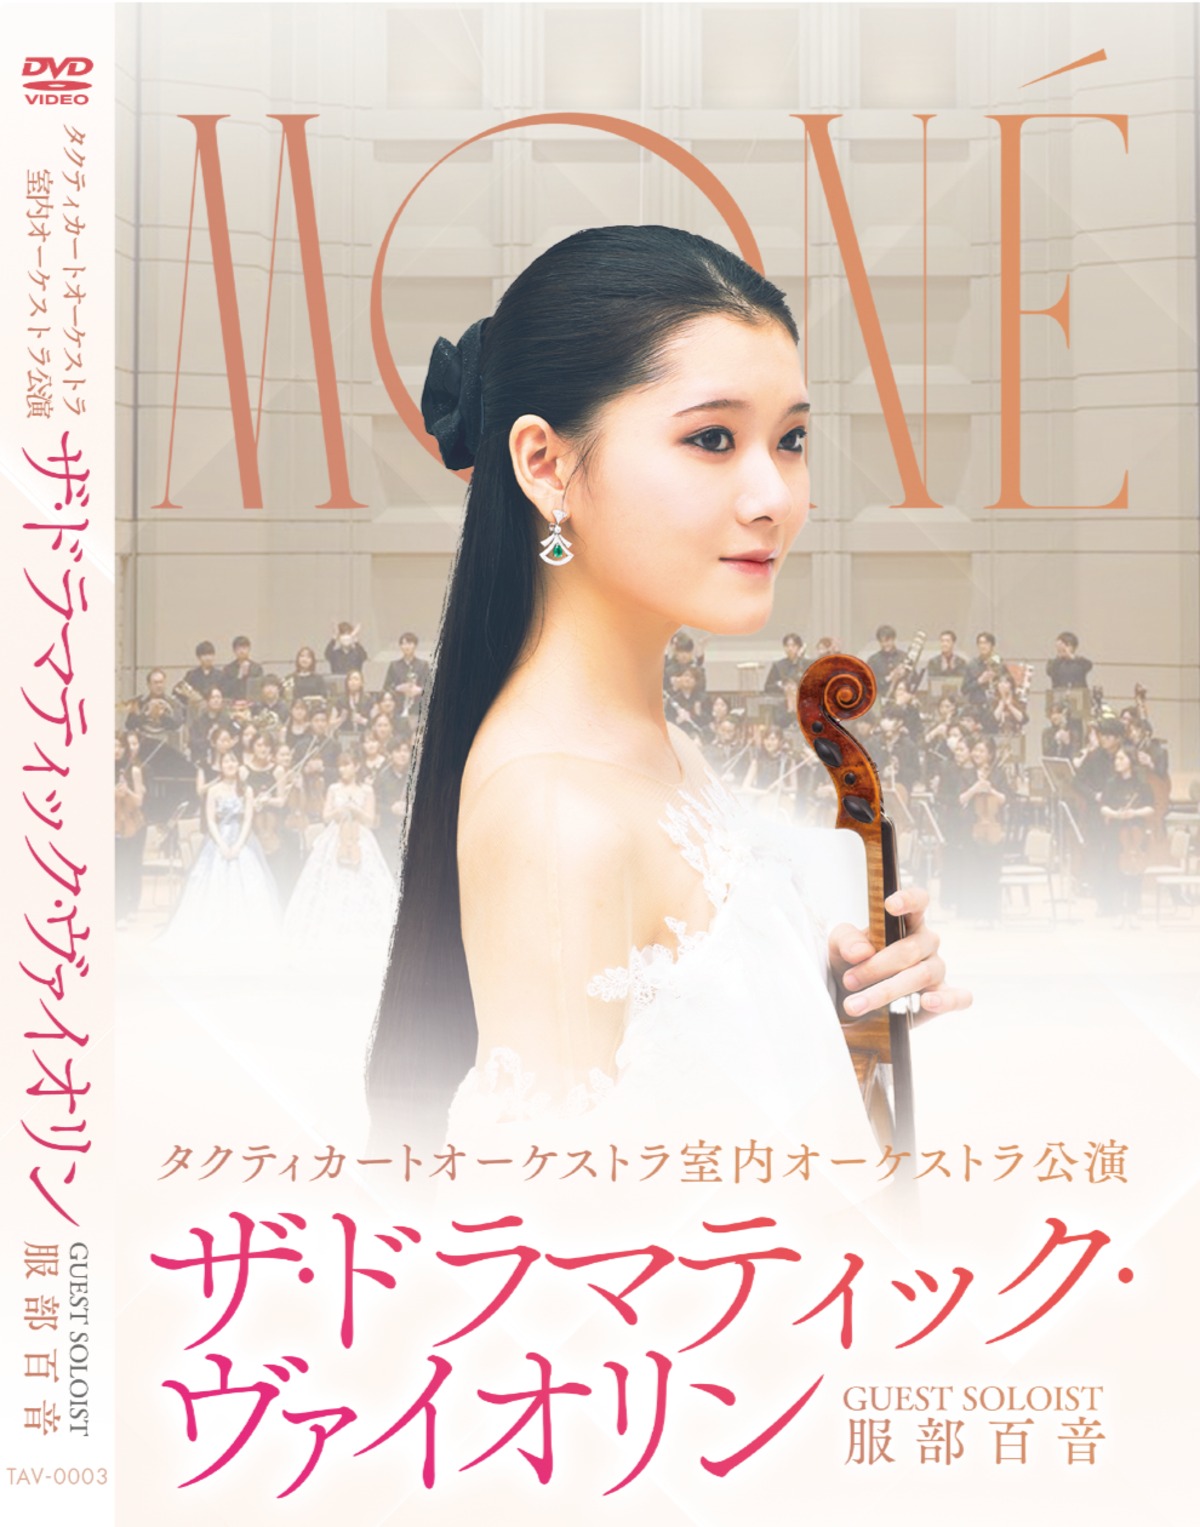 DVD】『ザ・ドラマティック・ヴァイオリン - Guest Soloist 服部百音